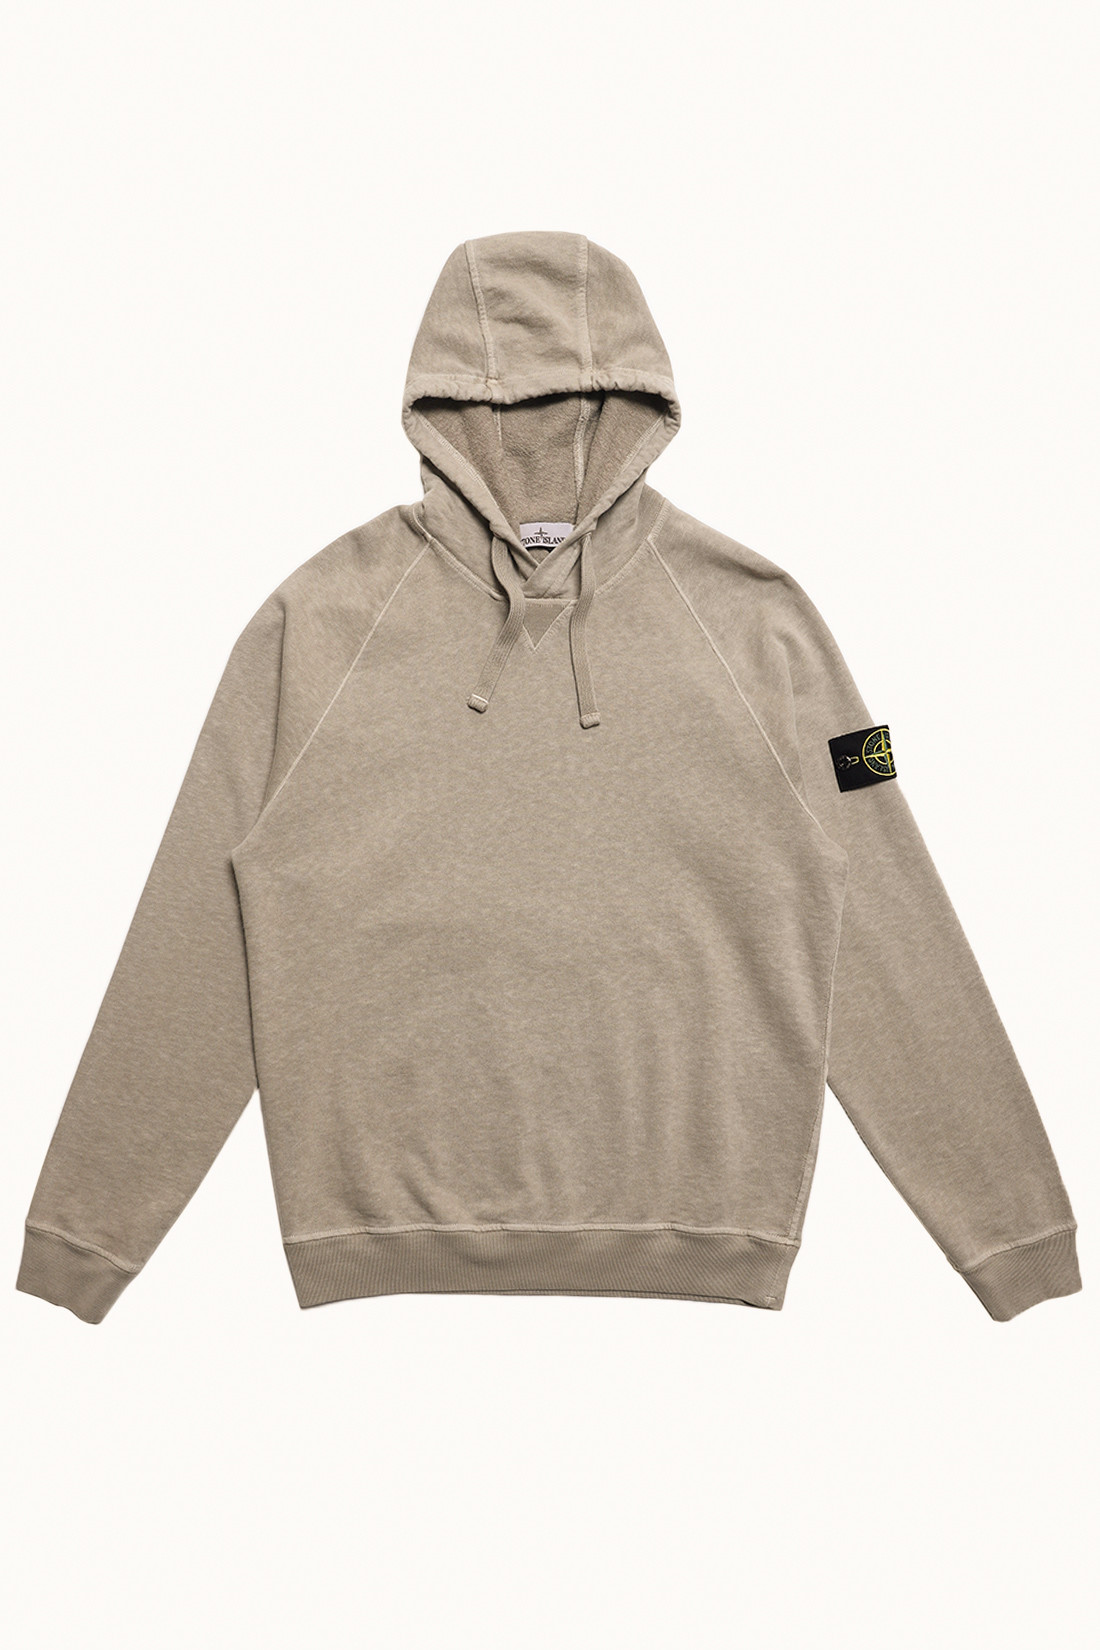 62160 hooded sweater v0192 Tortora